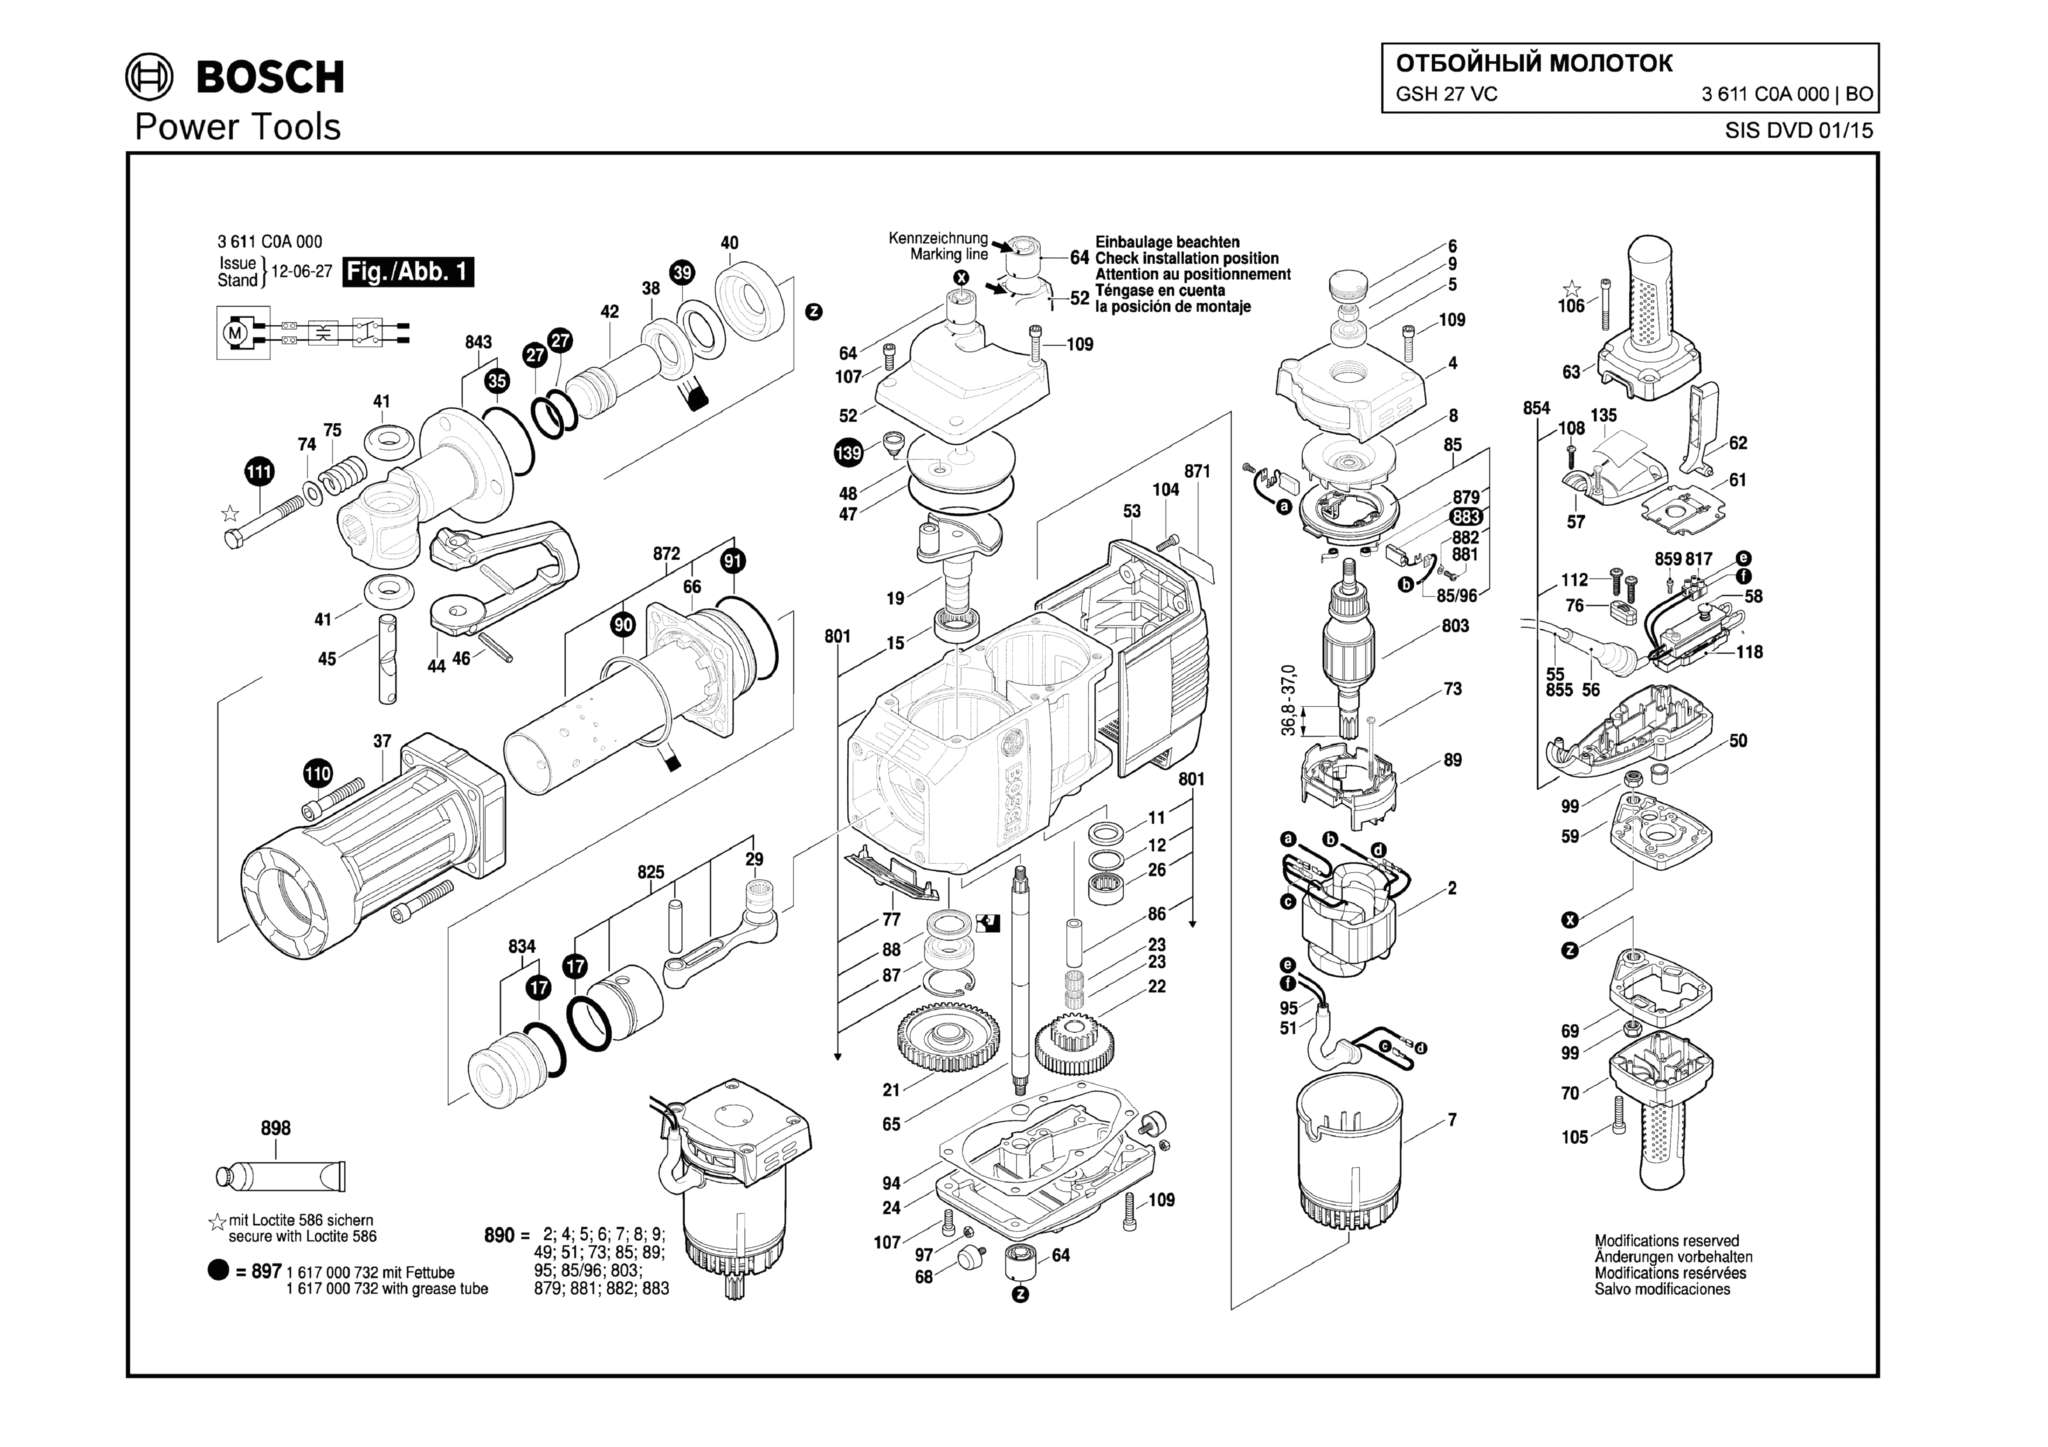 Запчасти, схема и деталировка Bosch GSH 27 VC (ТИП 3611C0A000)